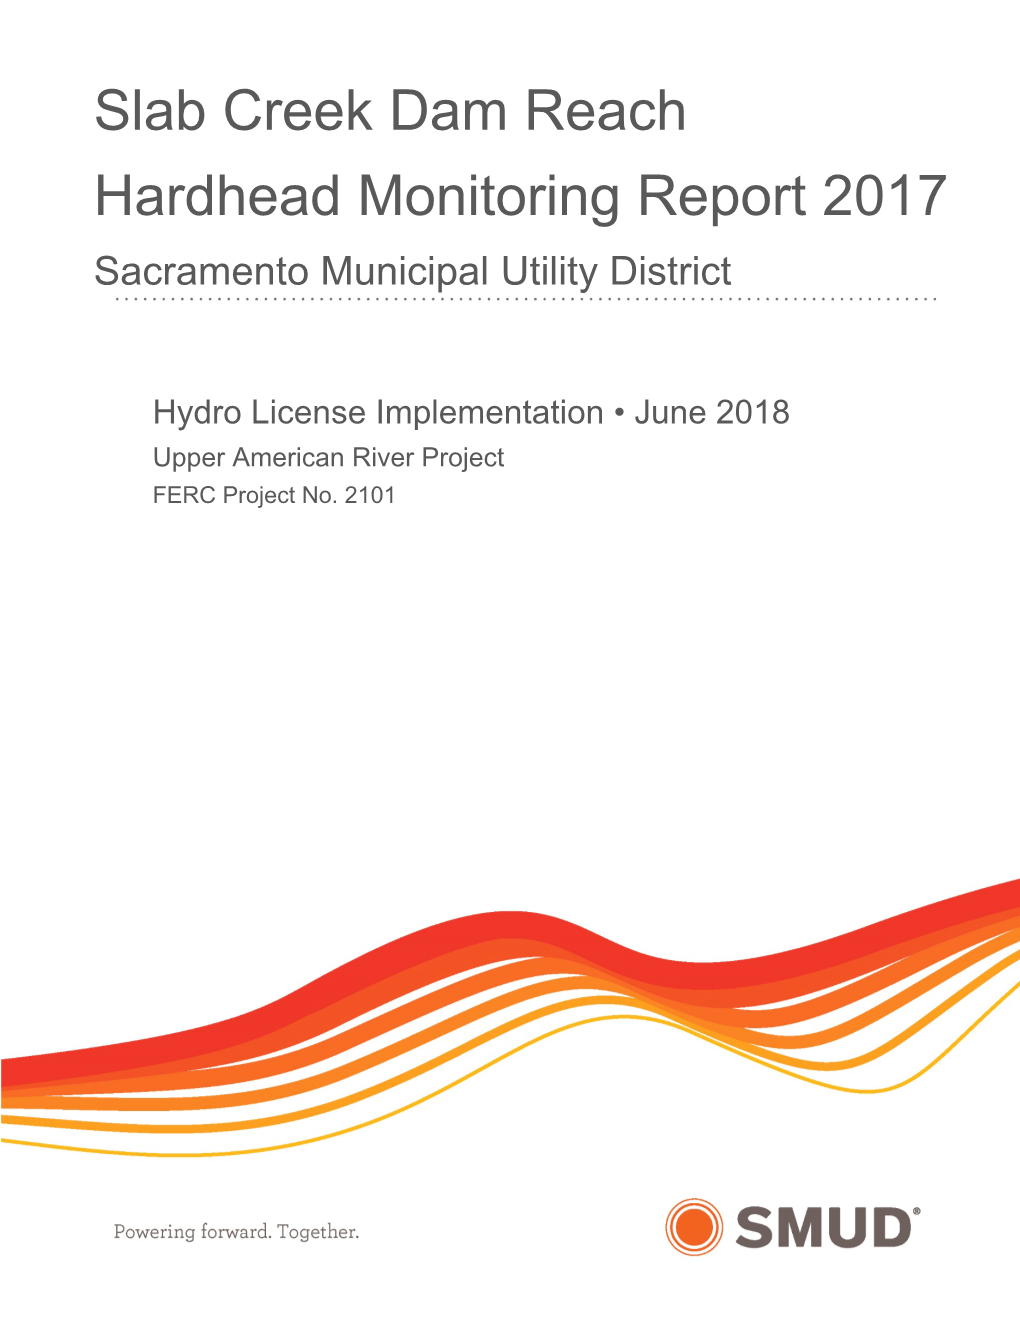 2017 Hardhead Monitoring Report